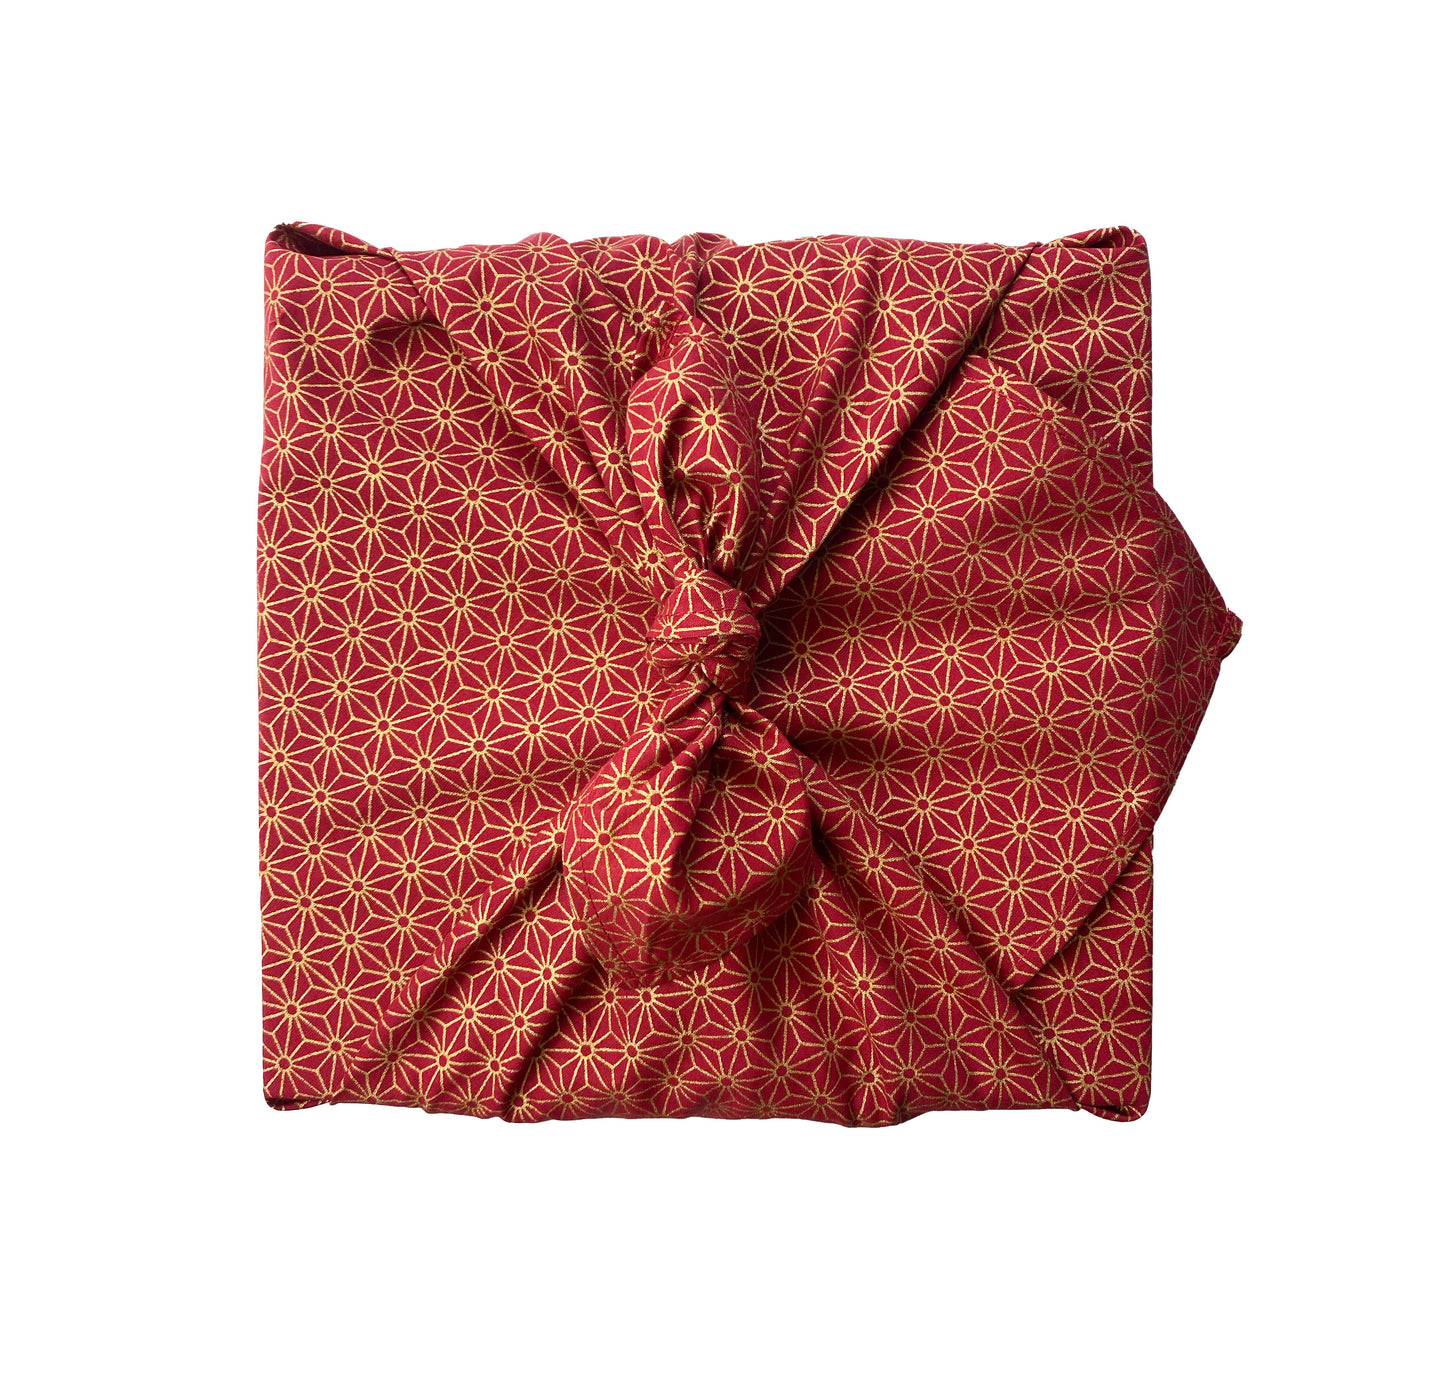 Furoshiki Classics - Jade and Ruby Fabric Gift Wrapping